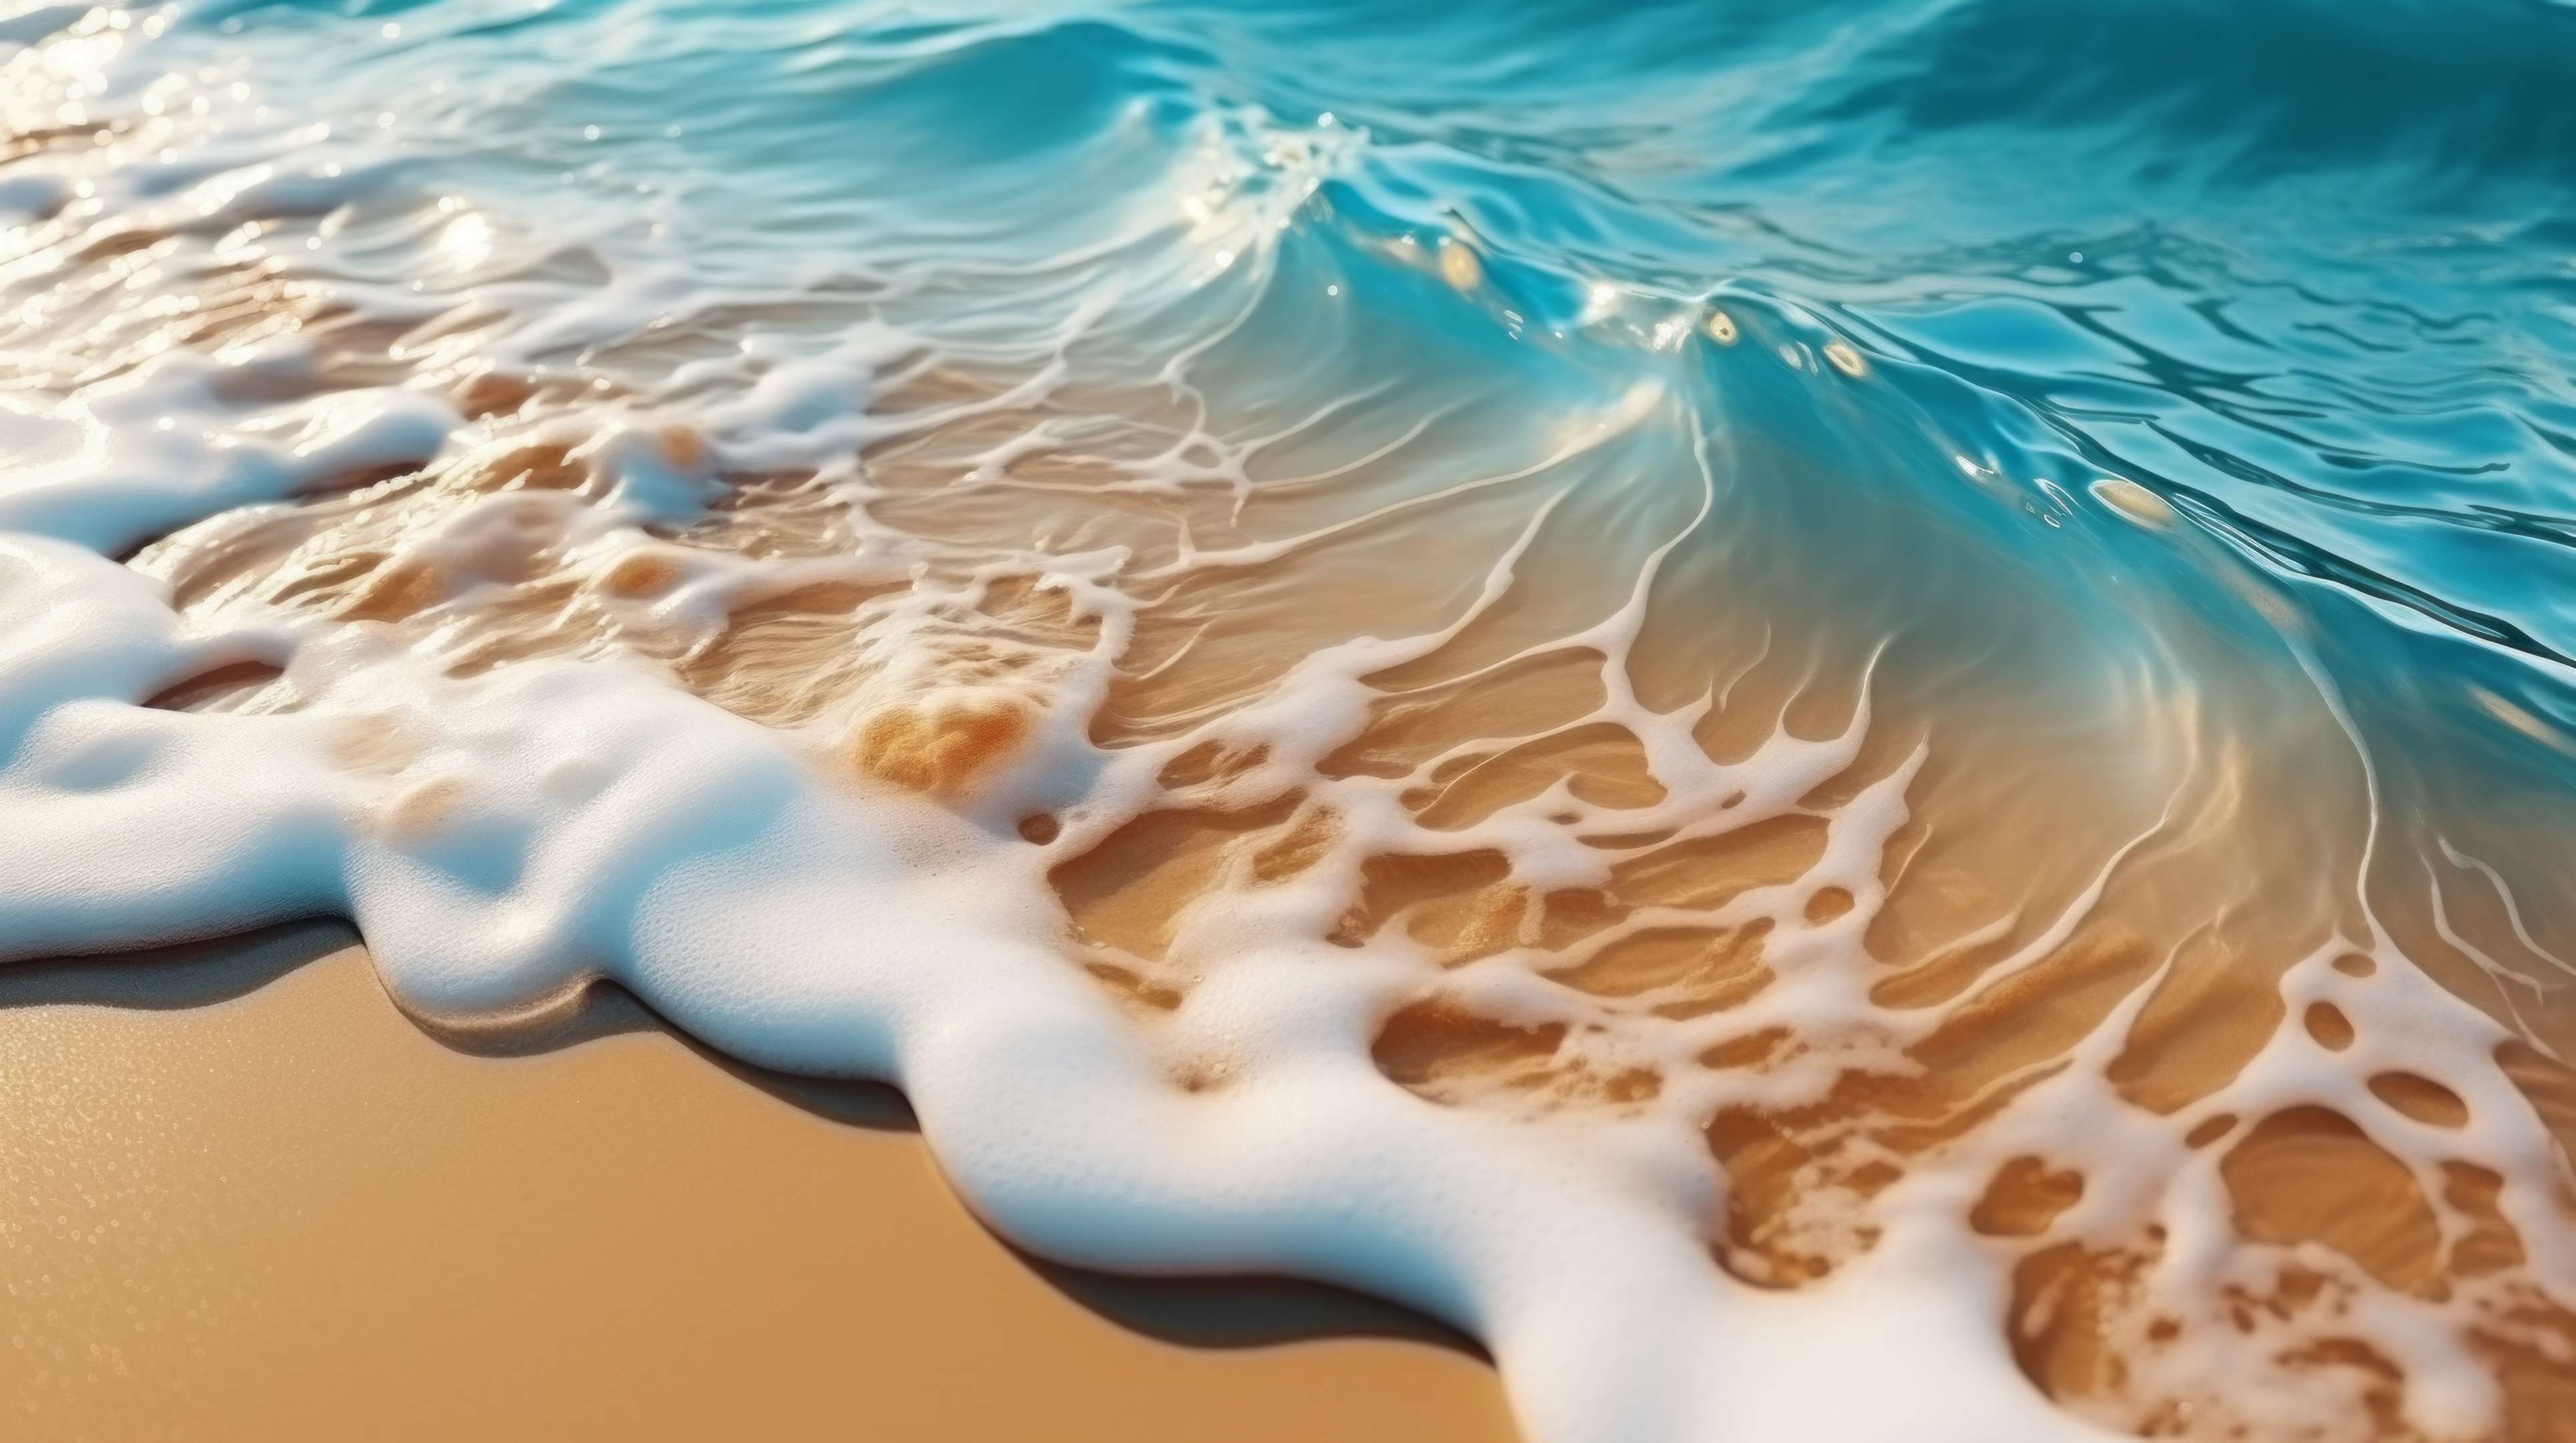 General 3860x2163 AI art beach sand waves foam water